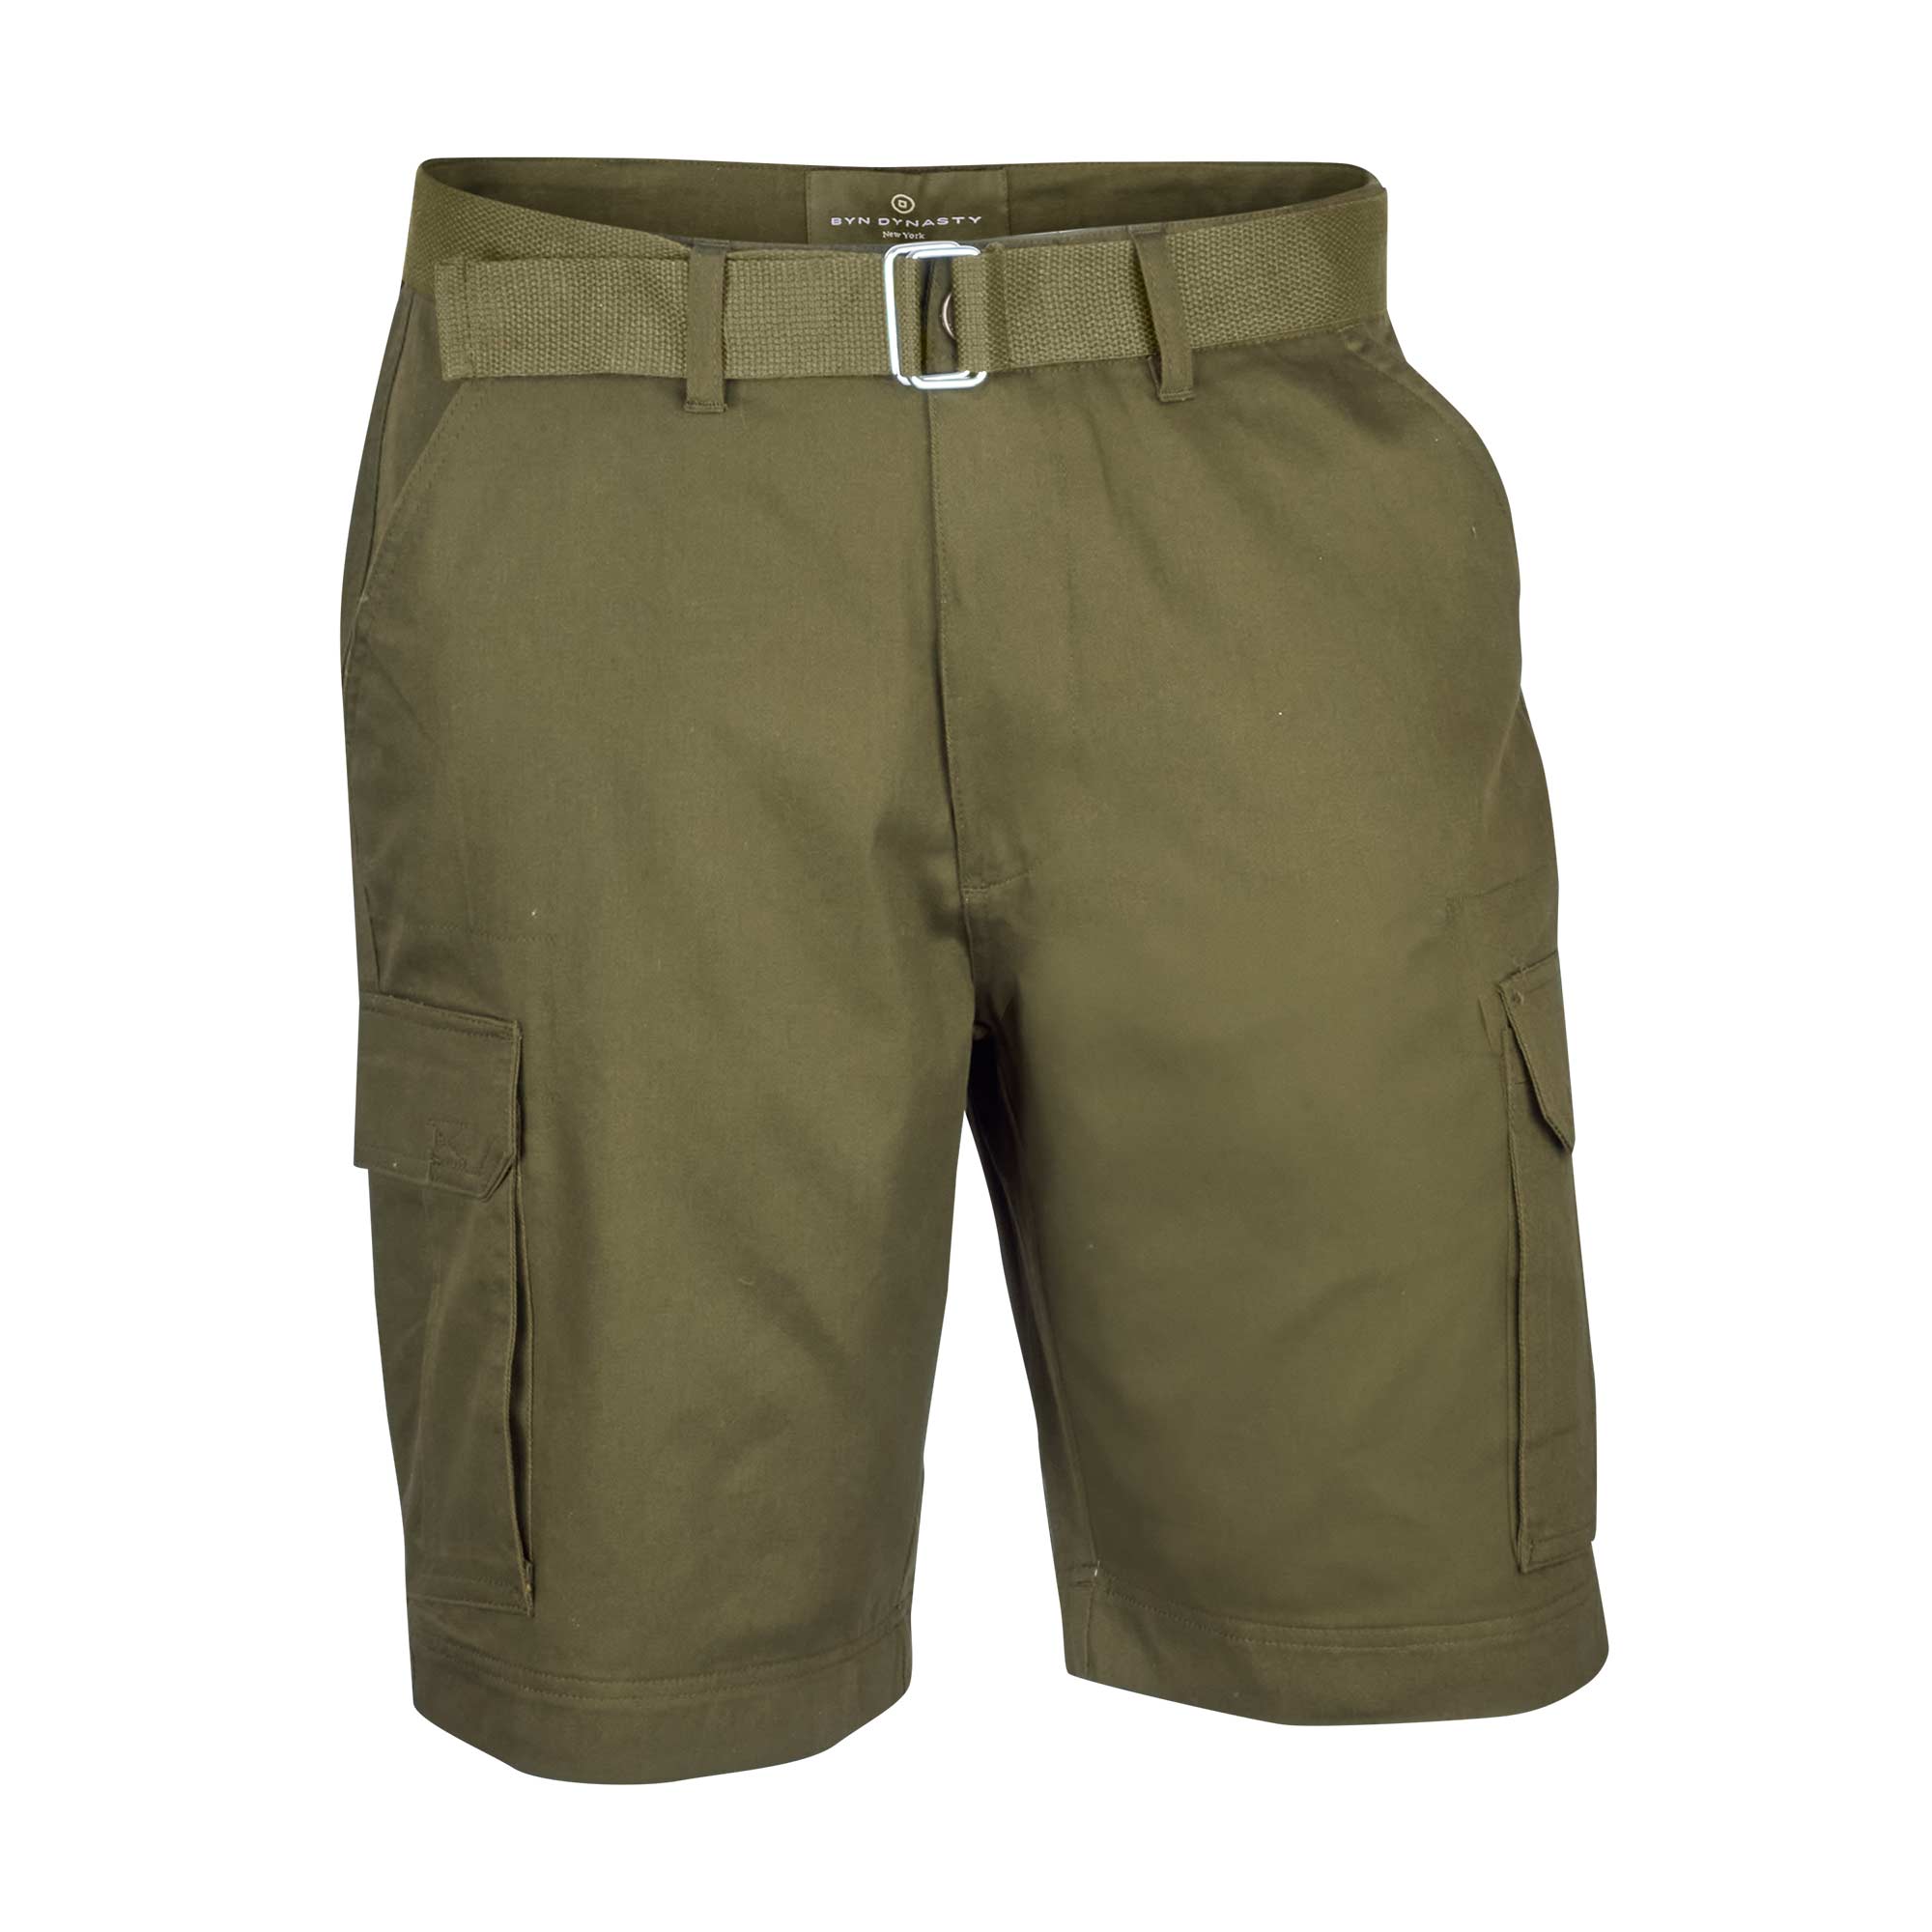 Men's Cargo Shorts - 2 Pack